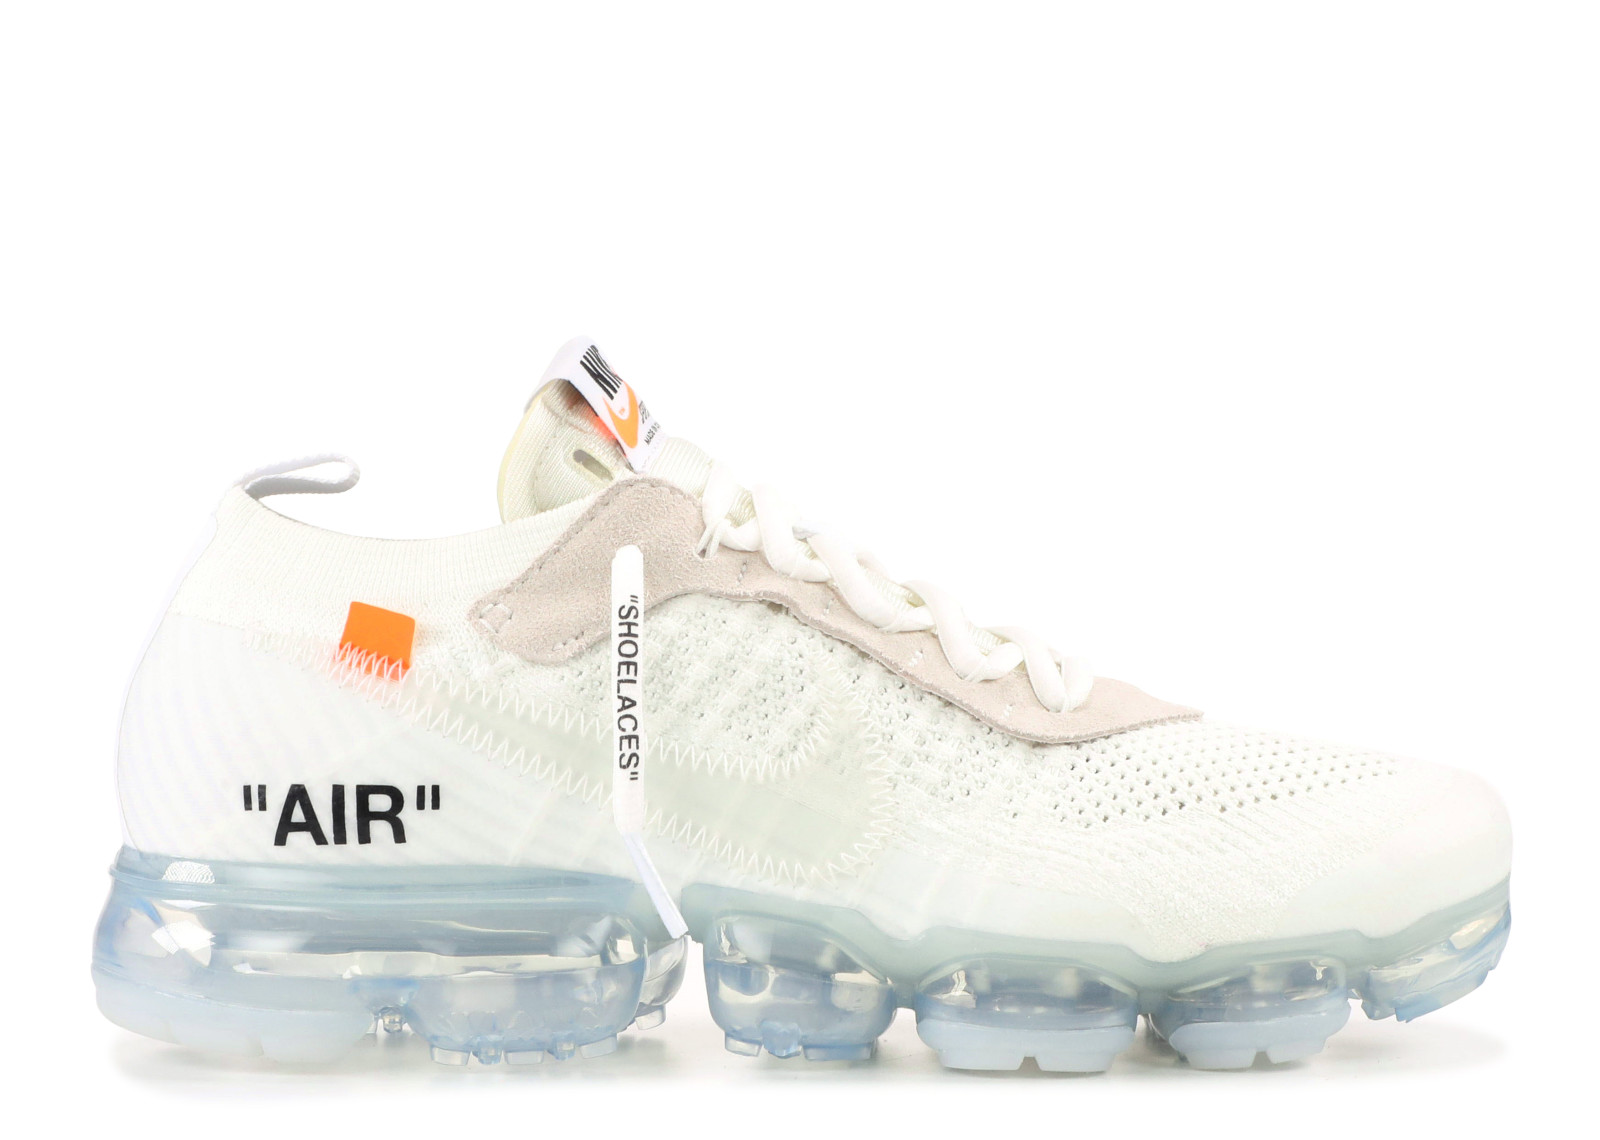 off-white Nike vapor max 1st